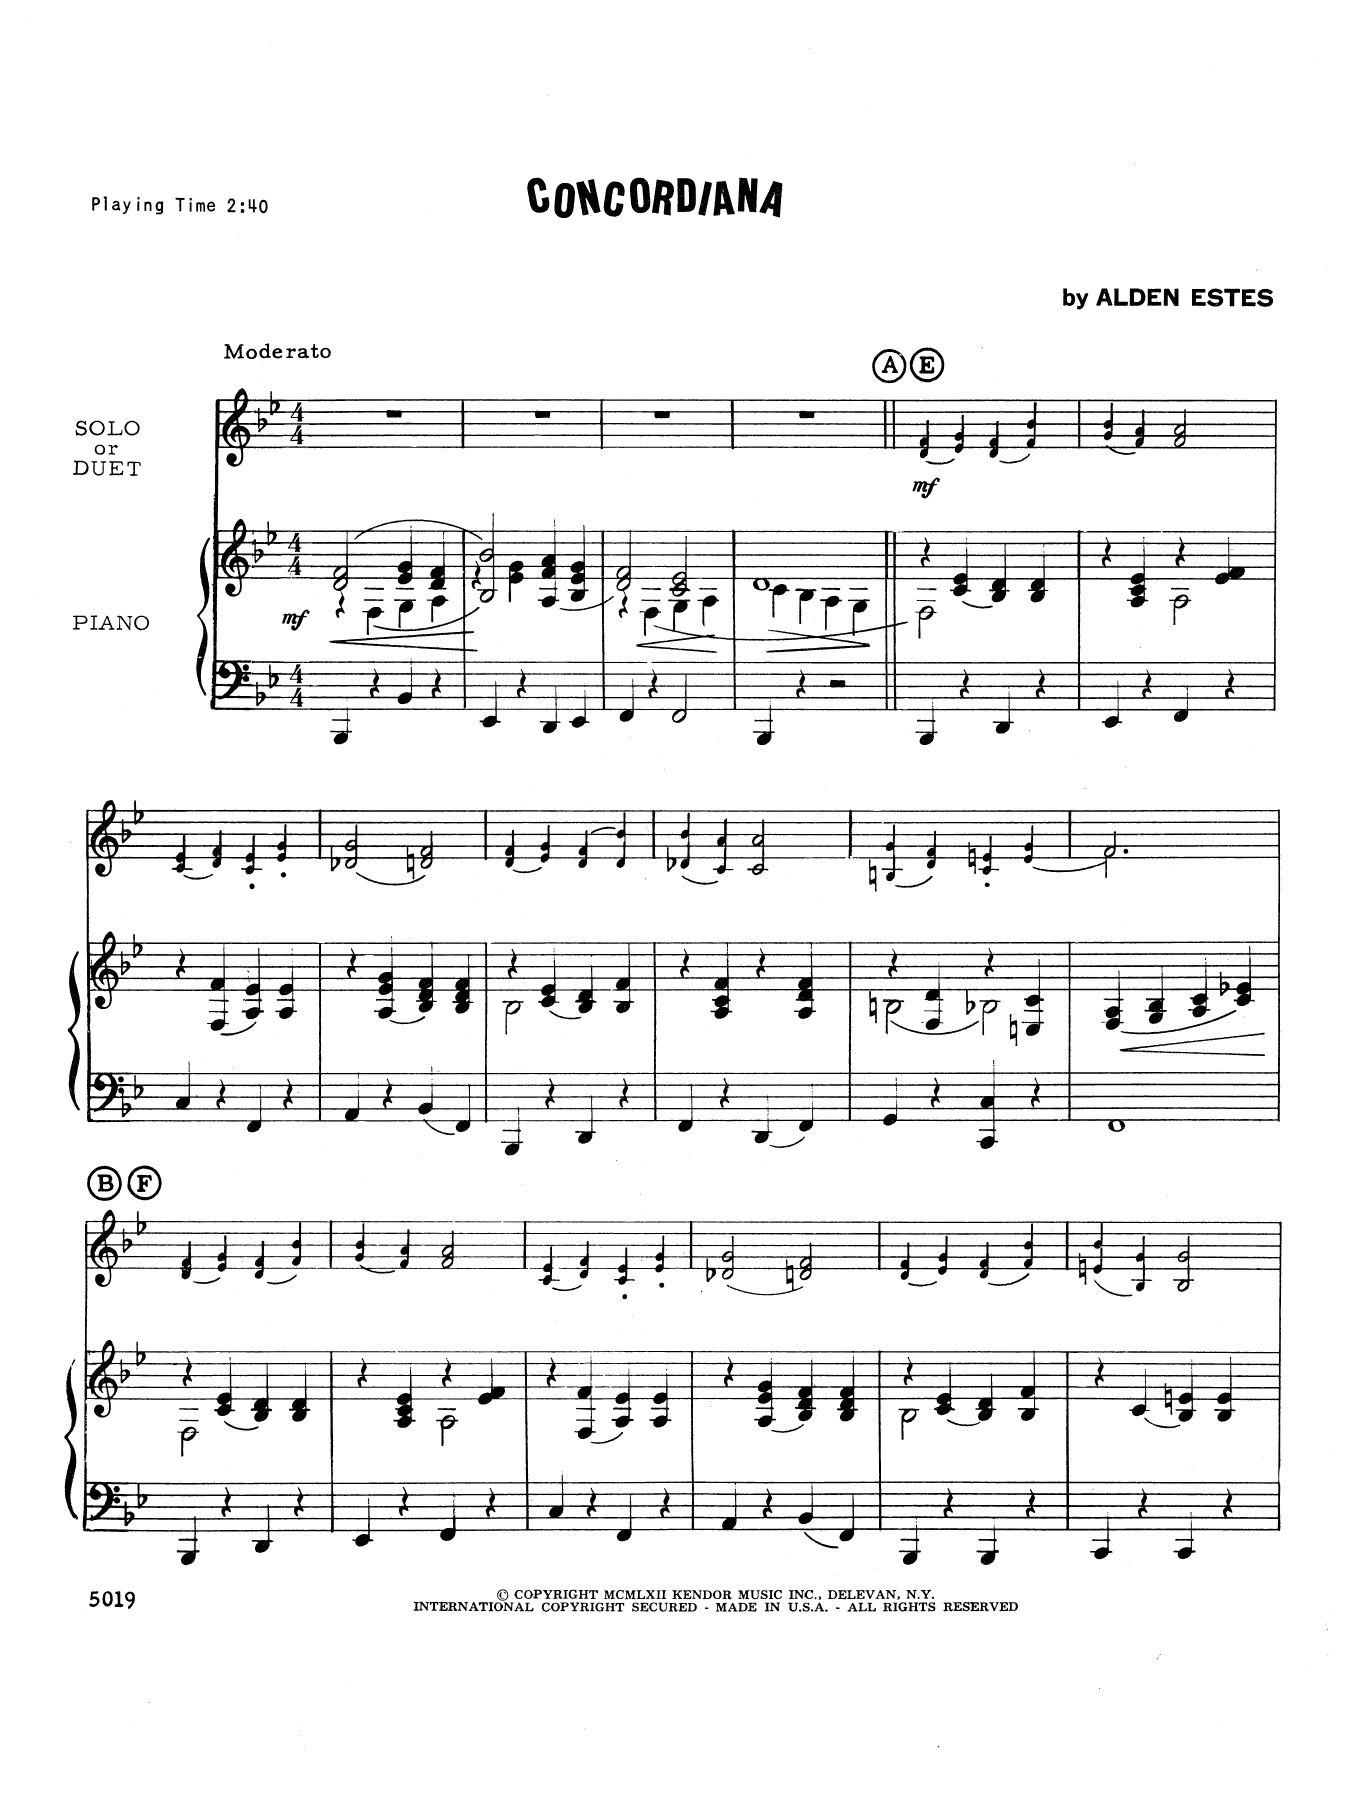 Download David Estes Concordiana - Piano Accompaniment Sheet Music